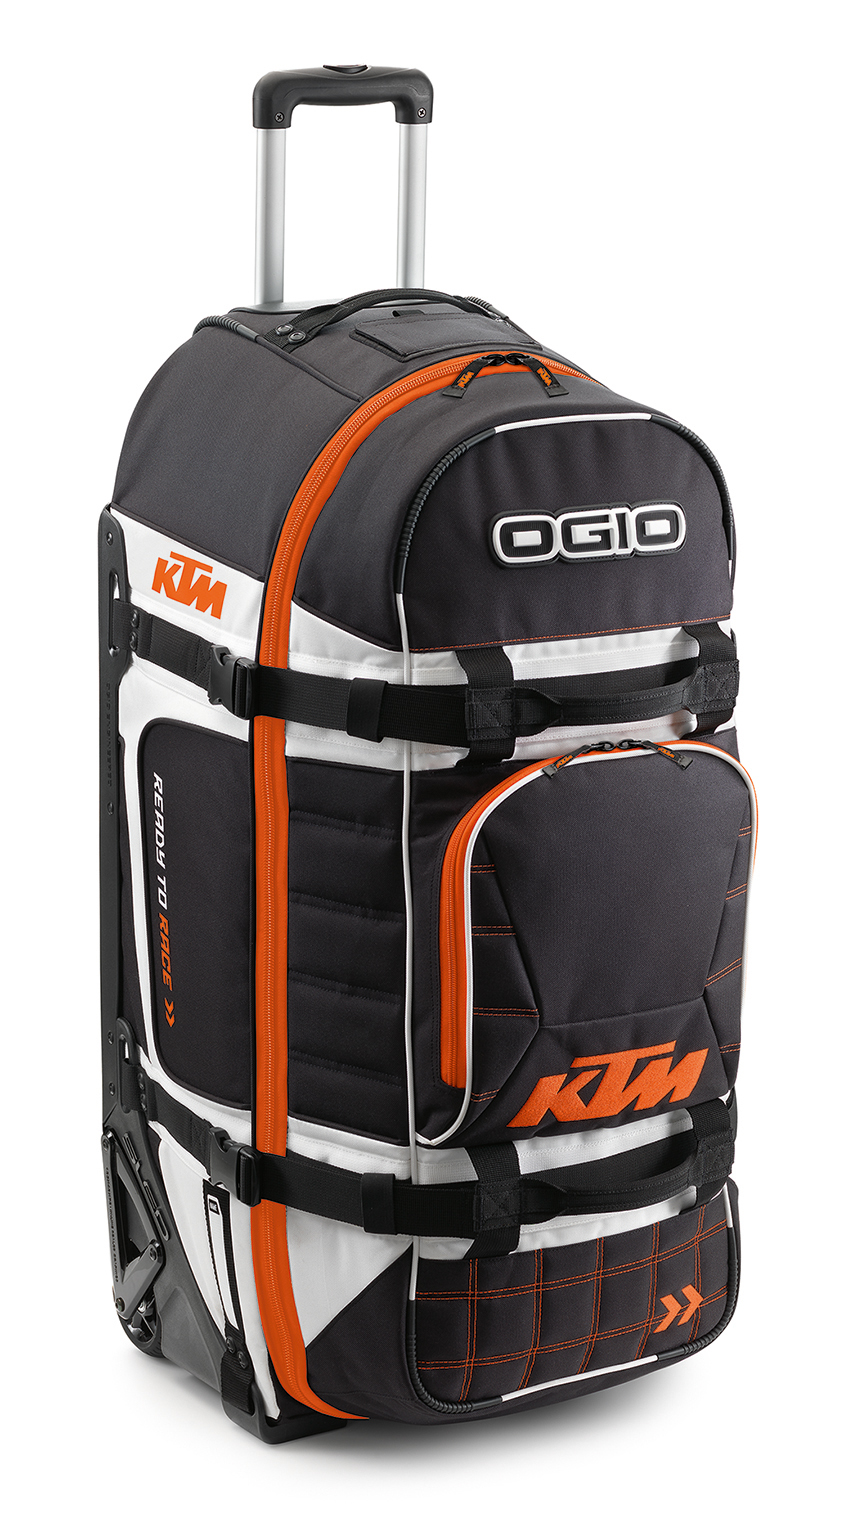 Main image of 2016 KTM Racing Travel Bag 9800